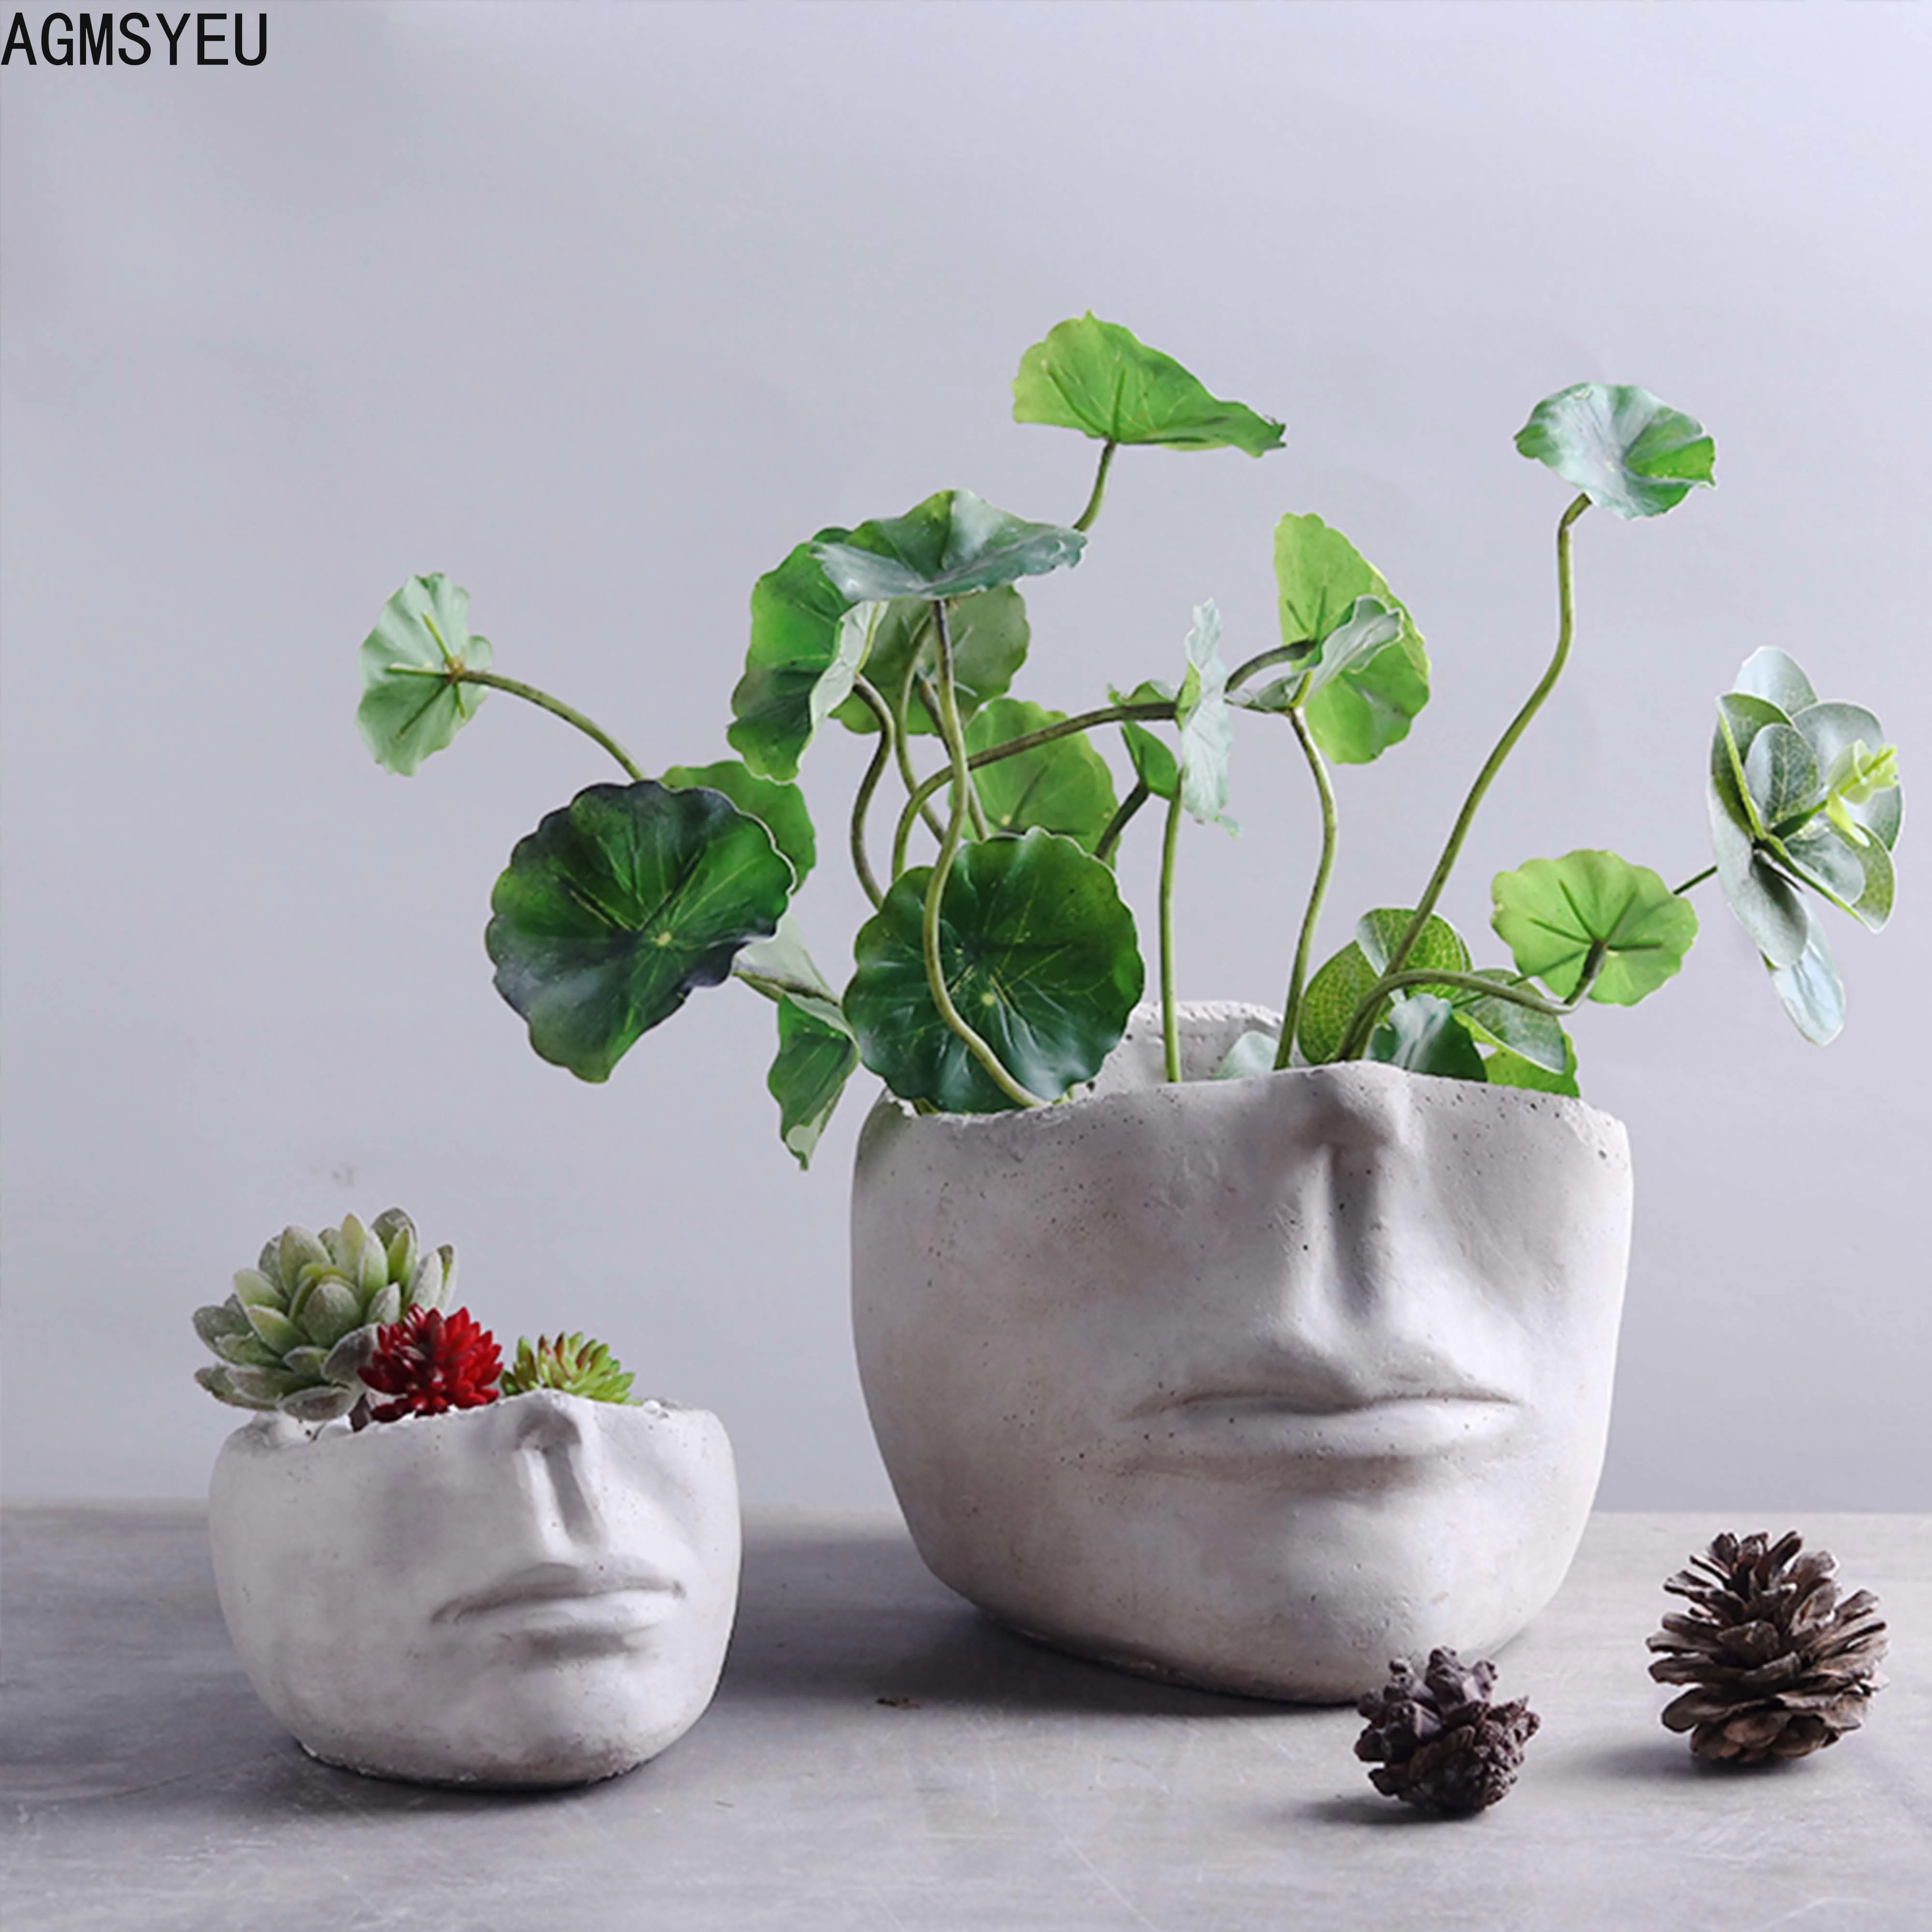 AGMSYEU Nordic Simple Creative Face Flower Pot Decoration Cement Material Living Room Desktop Succulent Potted Plant Ornaments